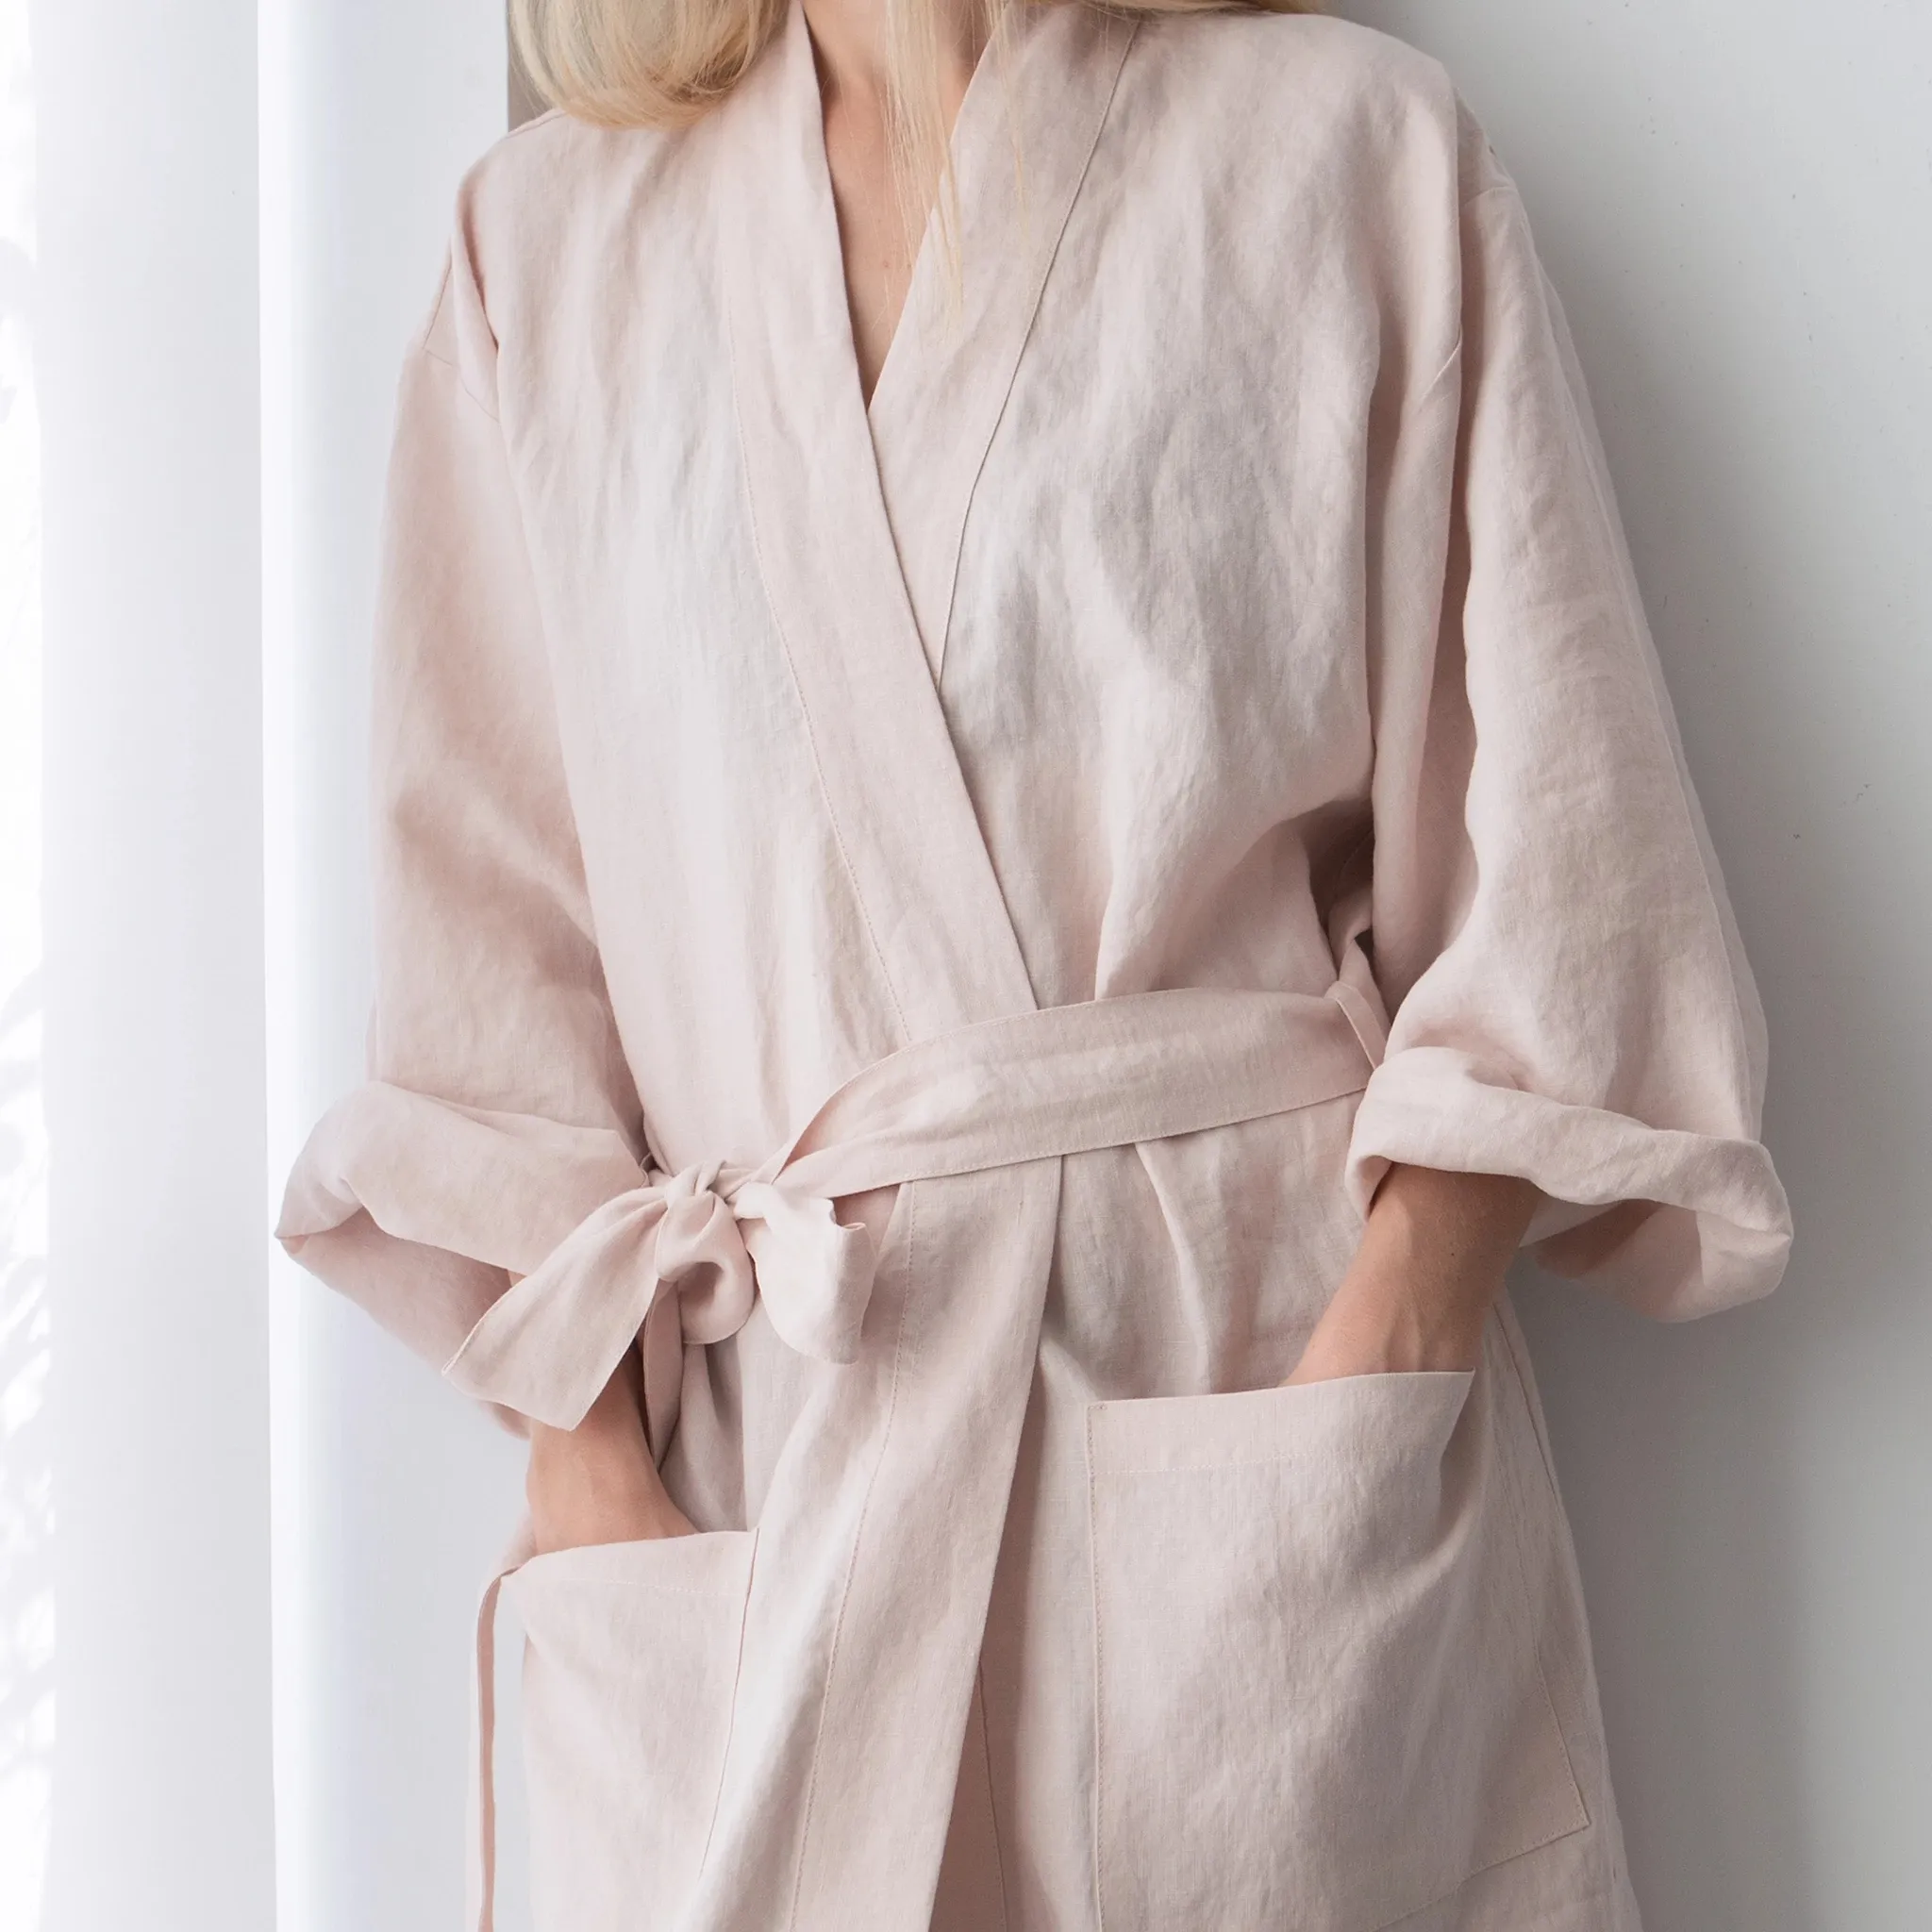 Washed soft linen kimono robes one size